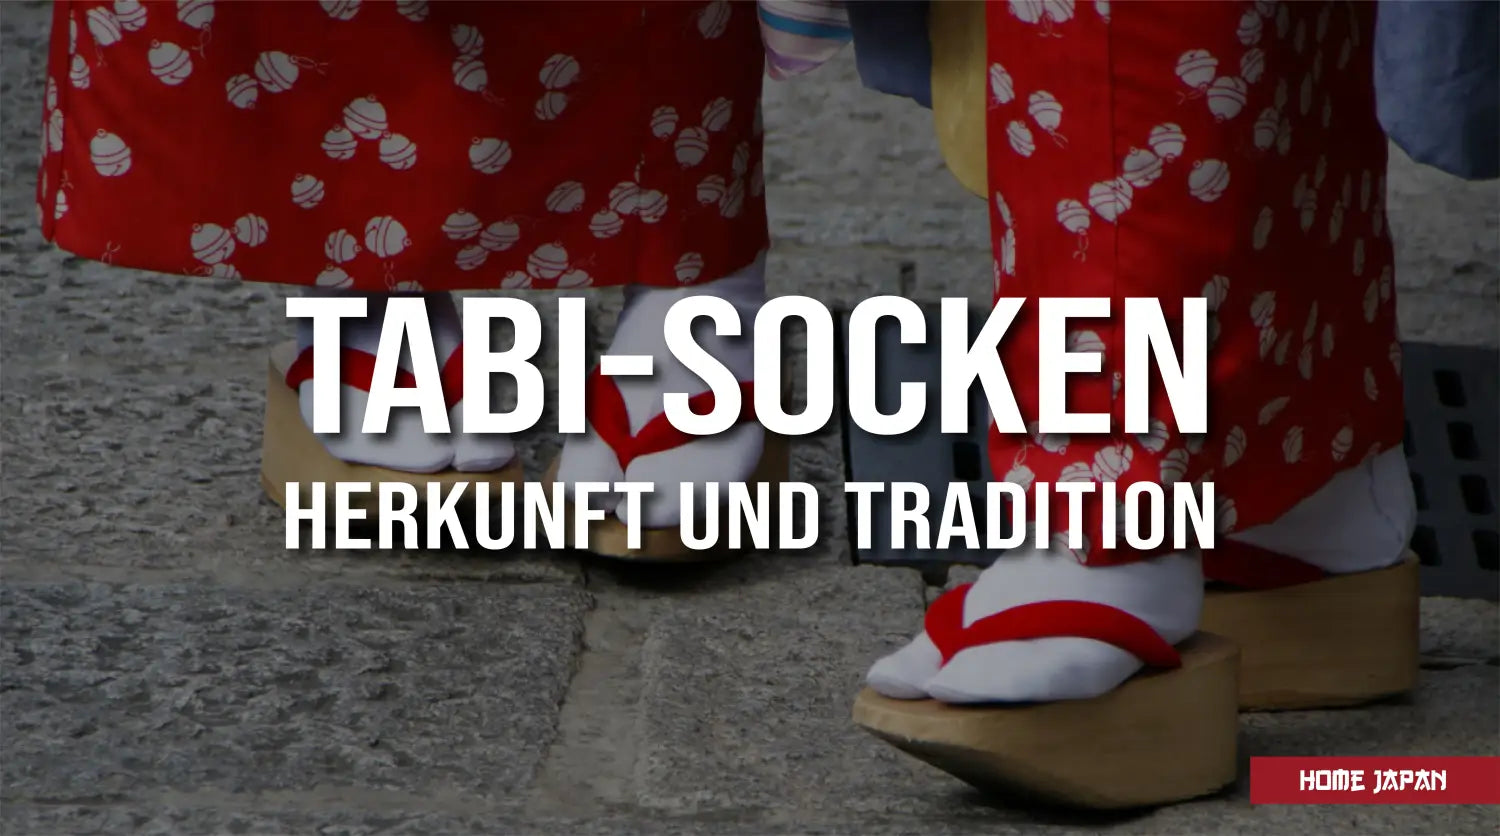 Geschichte der Tabi-Socken